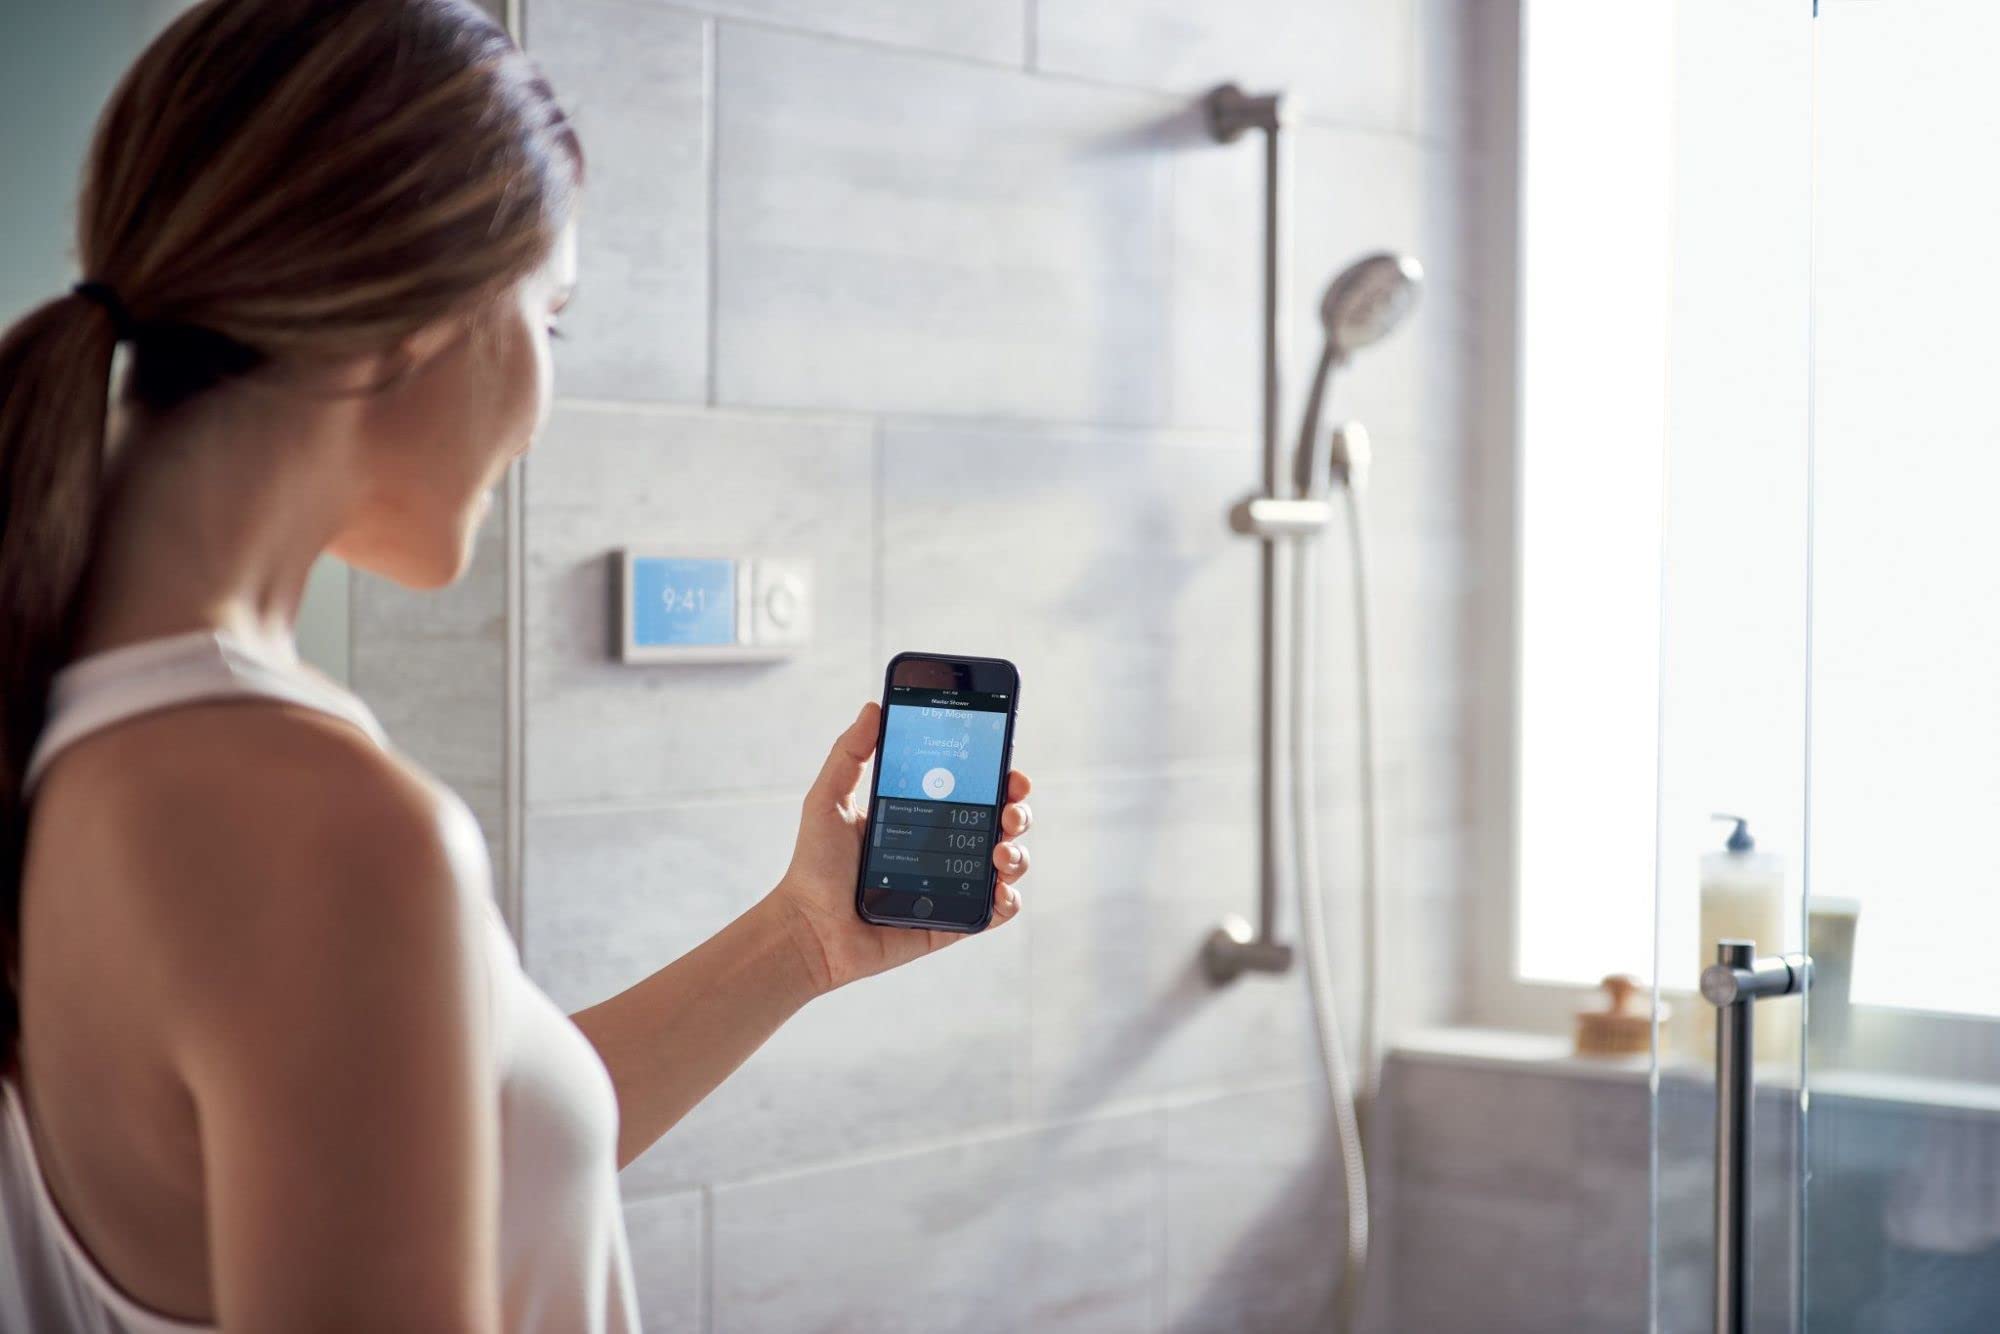 Moen Terra Beige Smart Shower 2-Outlet Digital Shower Controller for Thermostatic Shower Valve, TS3302TB